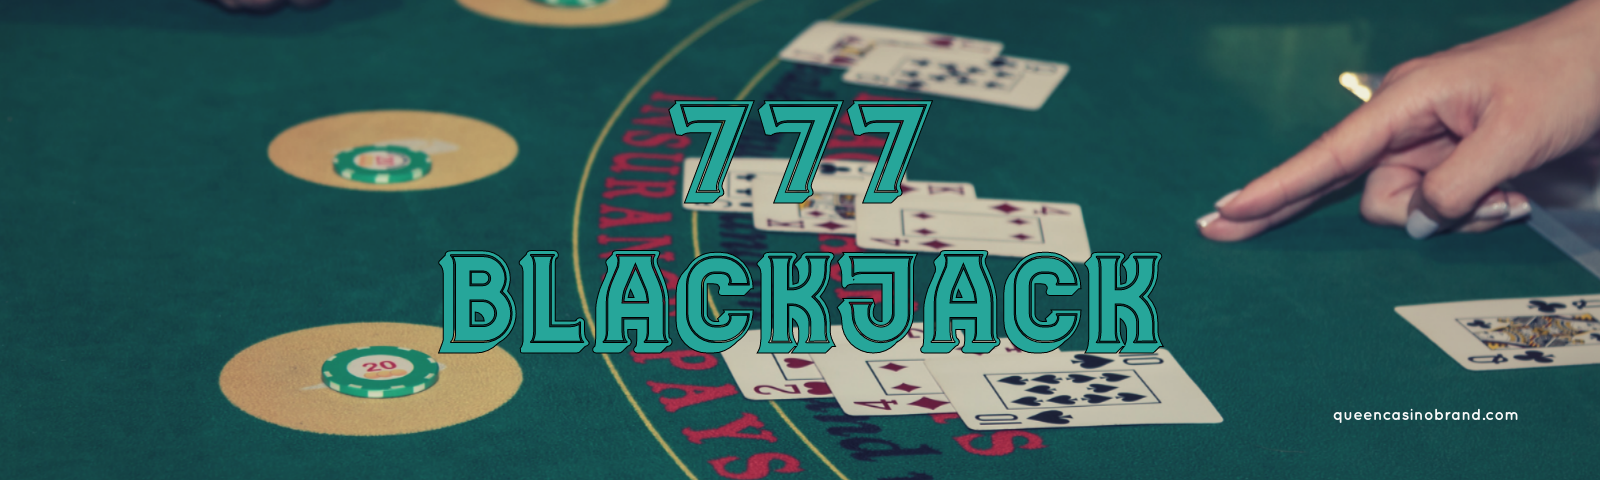 777 Blackjack Casino Game Overview | Queen Casino Brand